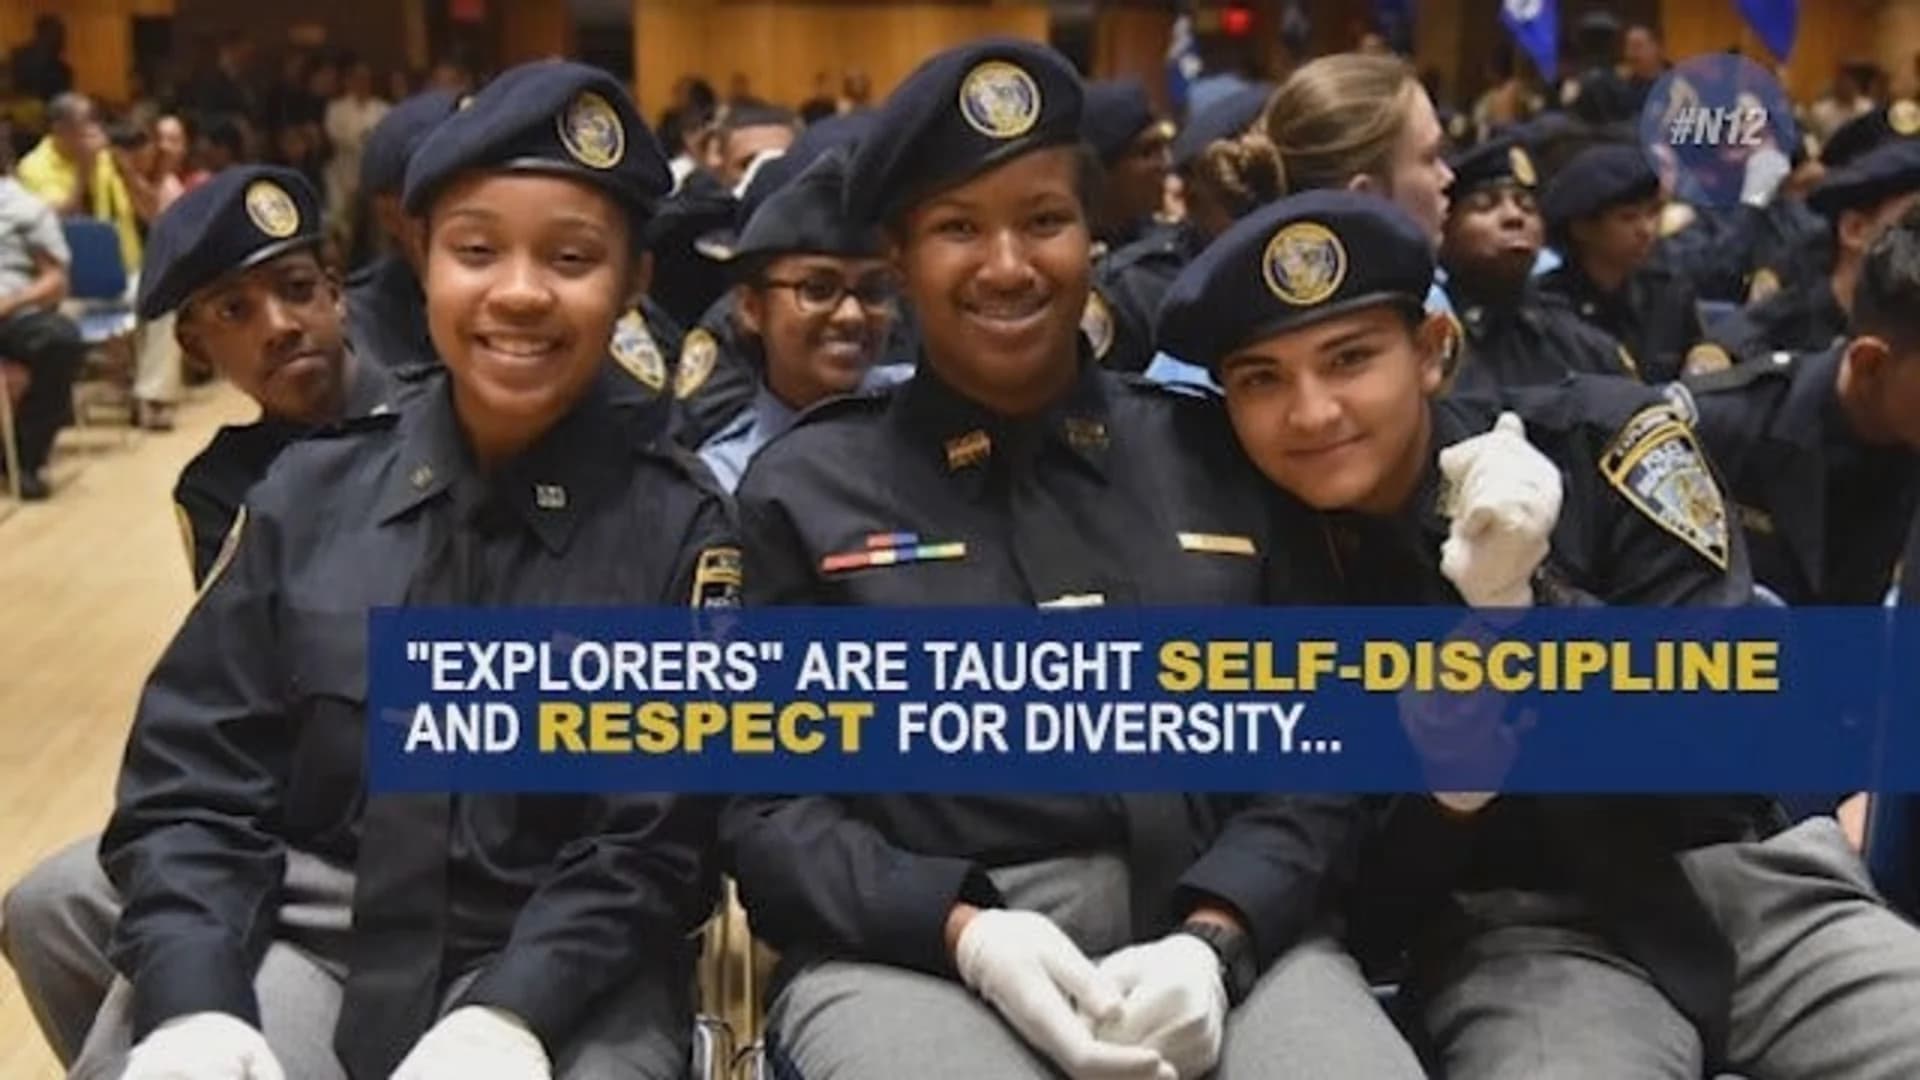 #N12BX: NYPD Explorers